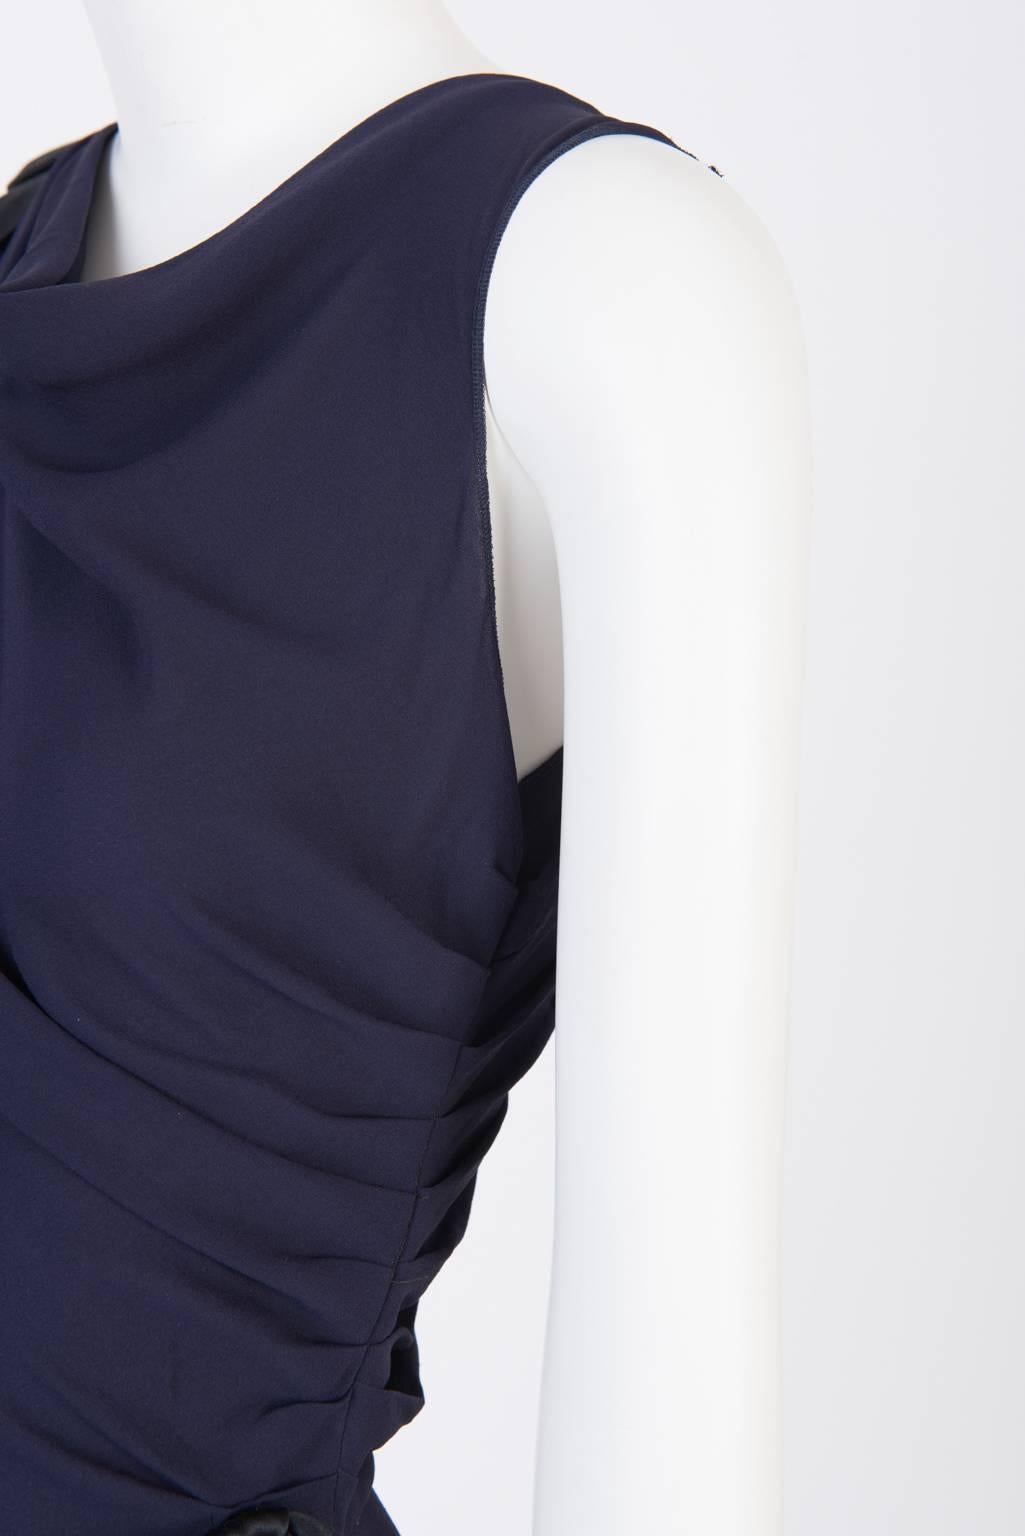 Women's Nina Ricci Purple Asymetrical Silk Dress For Sale